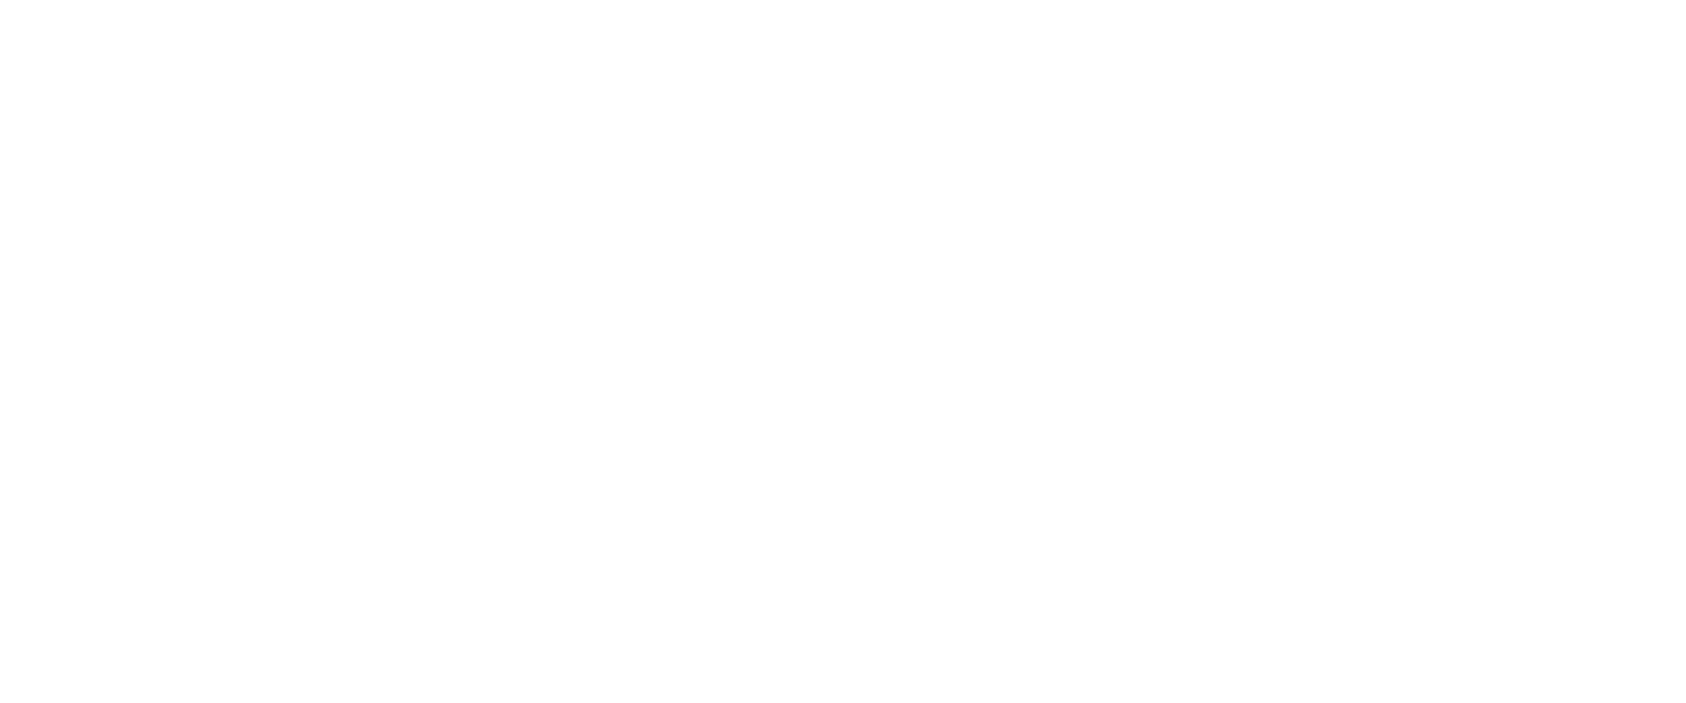 Cookies California logo